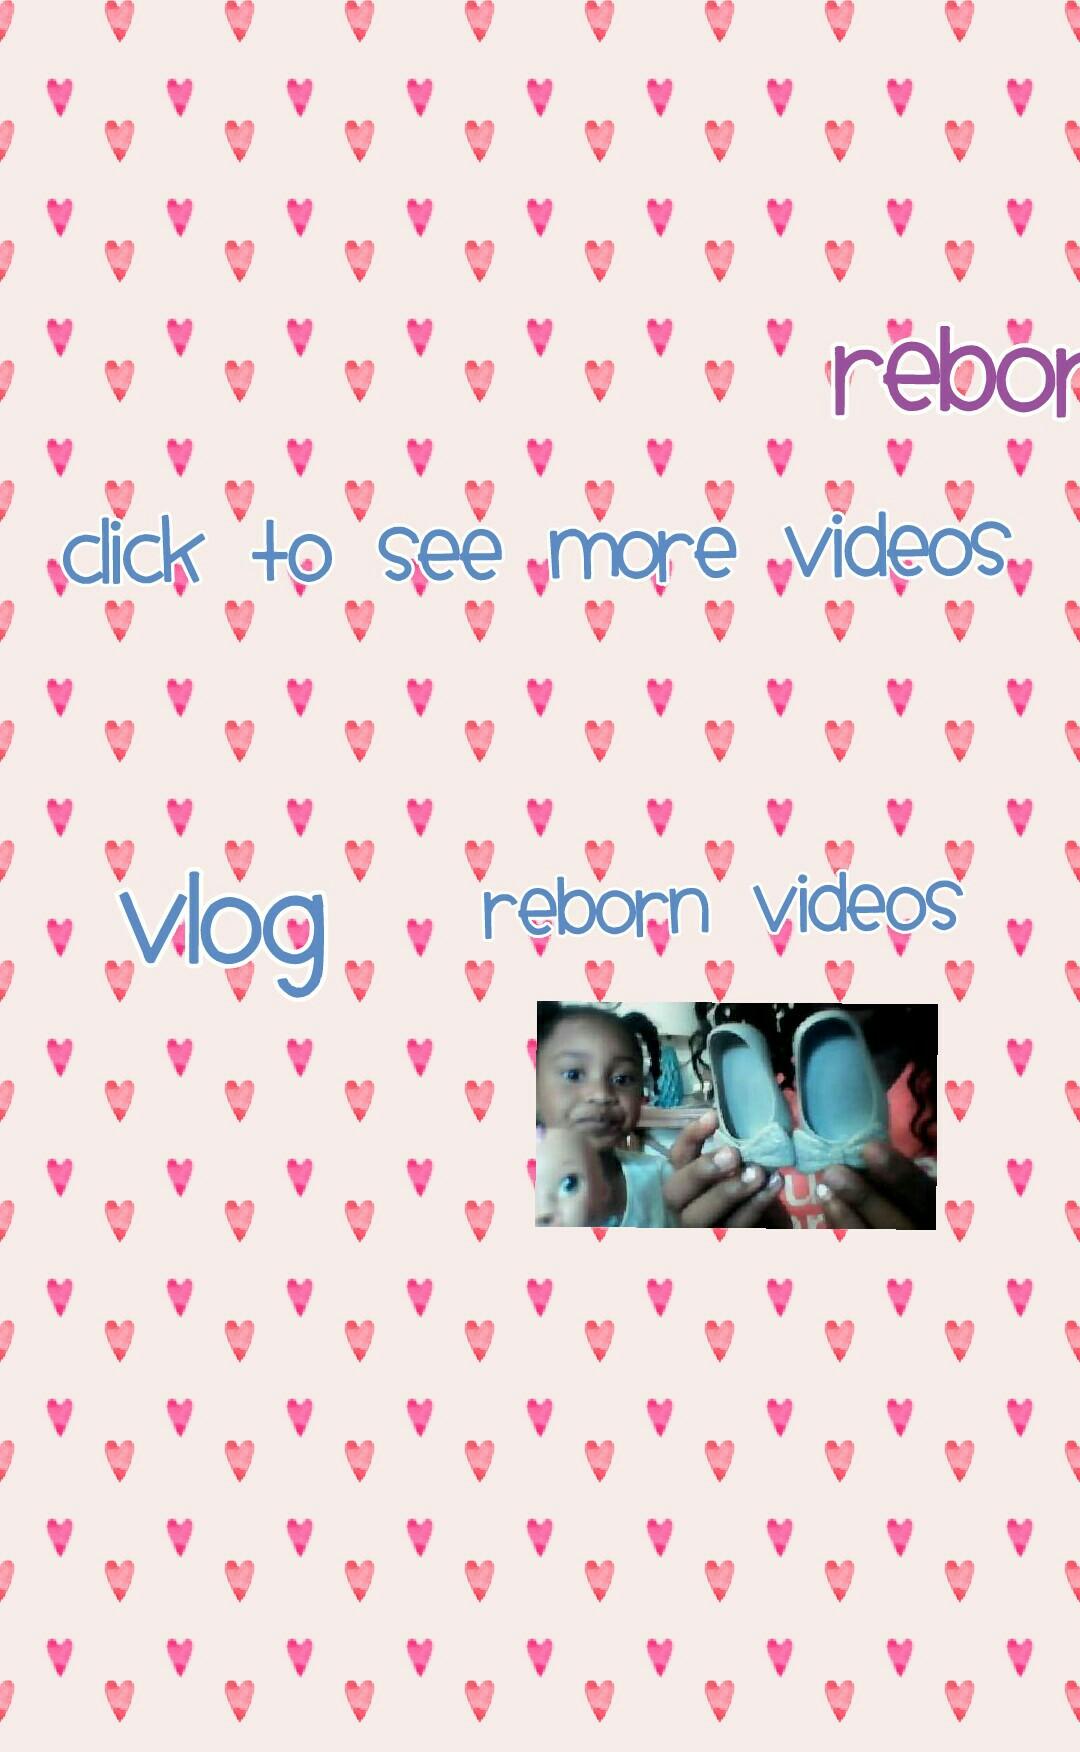 Reborn videos